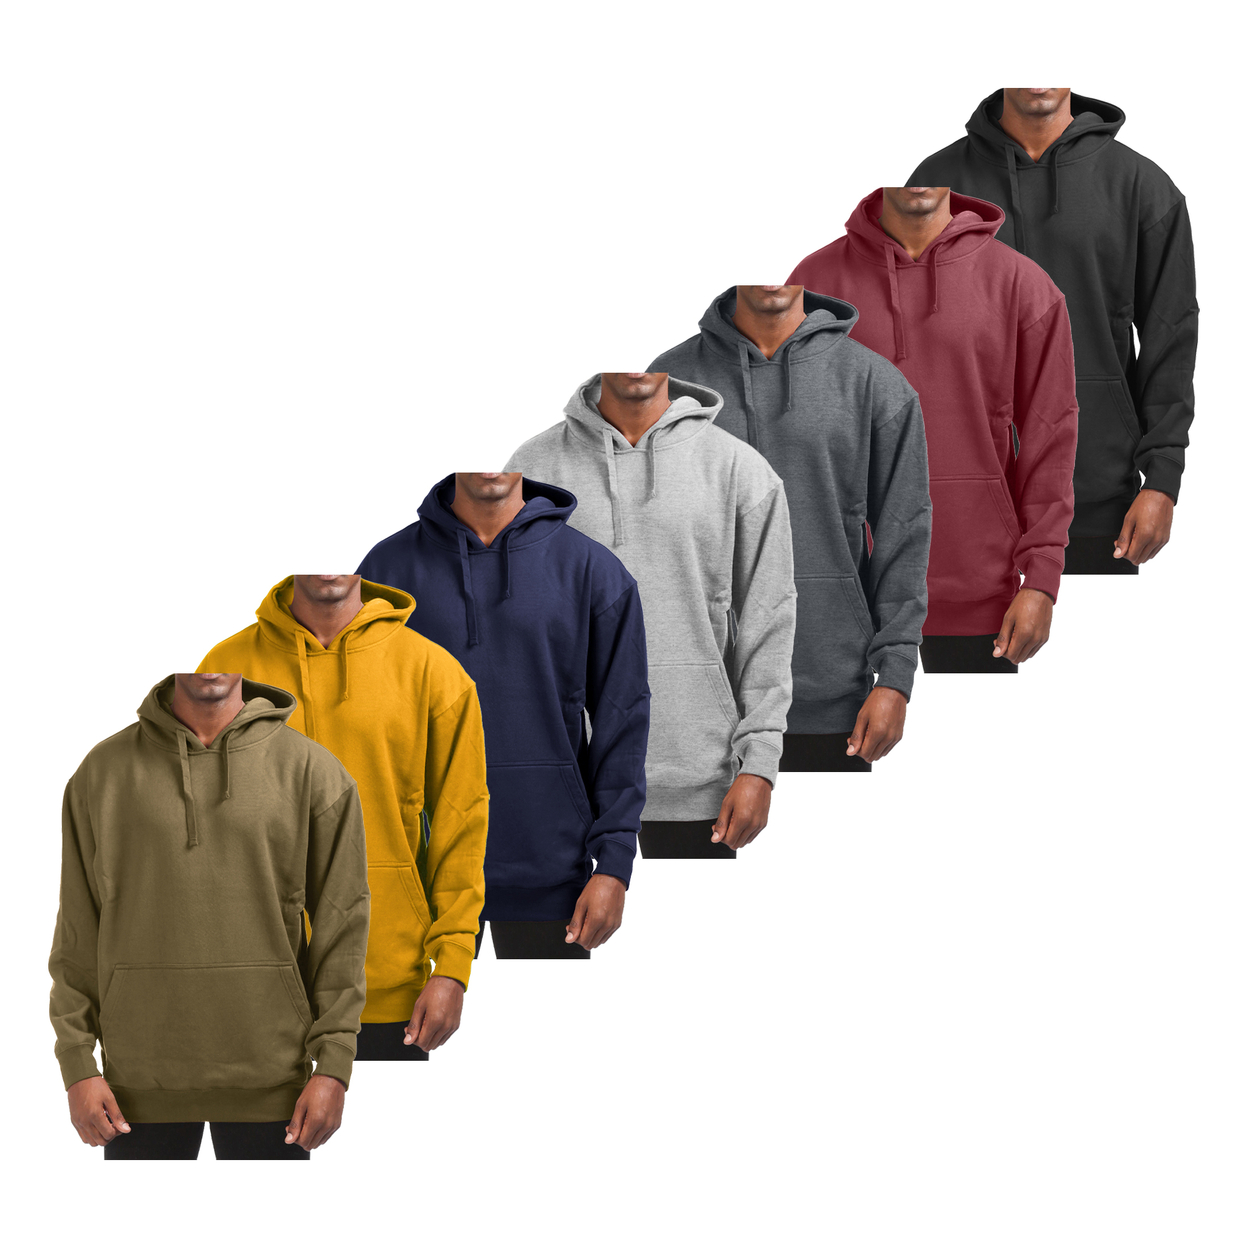 2-Pack: Men's Super-Soft Winter Warm Cotton-Blend Fleece Pullover Hoodie With Kangaroo Pocket - Black & Black, X-large